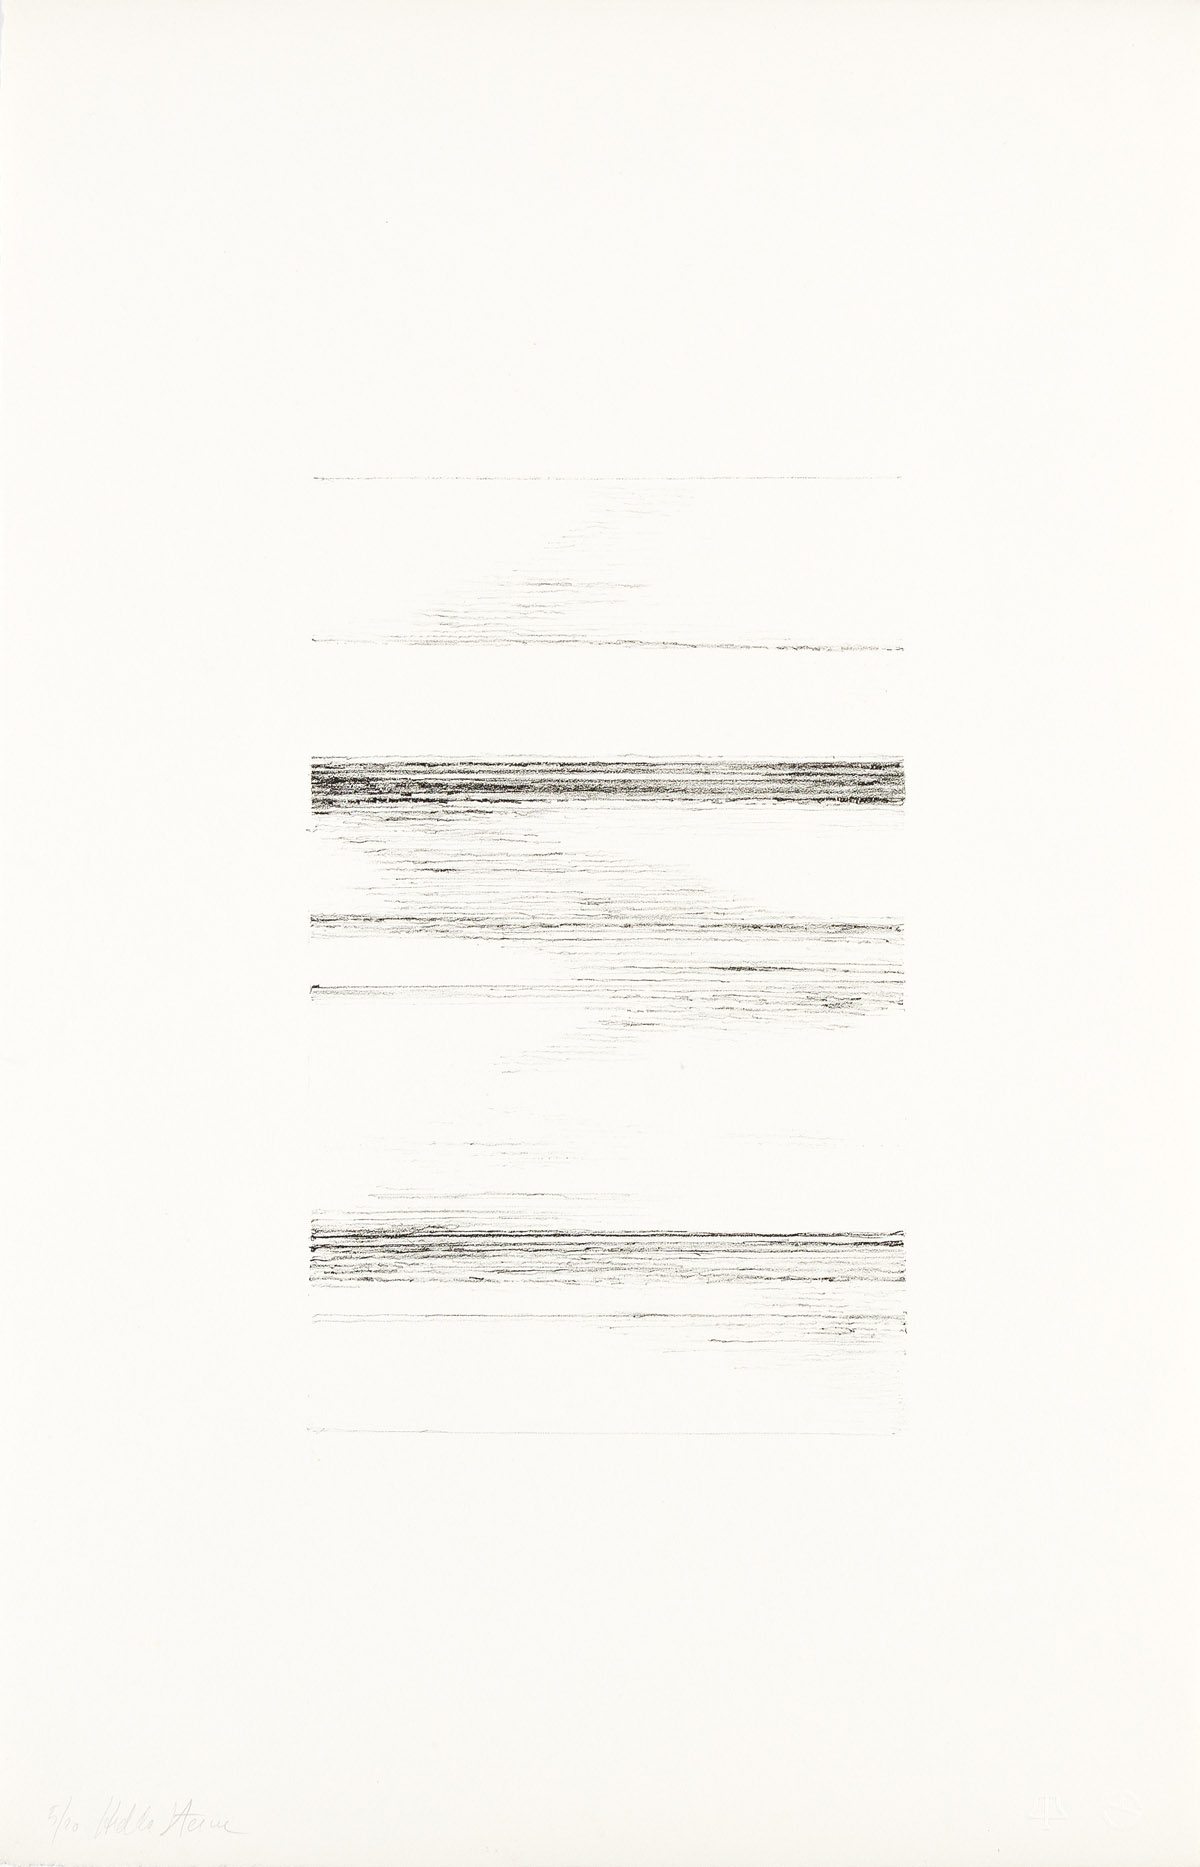 Sterne, Hedda (1910-2011) Untitled (The Vertical Horizontals I, II, IV and V).